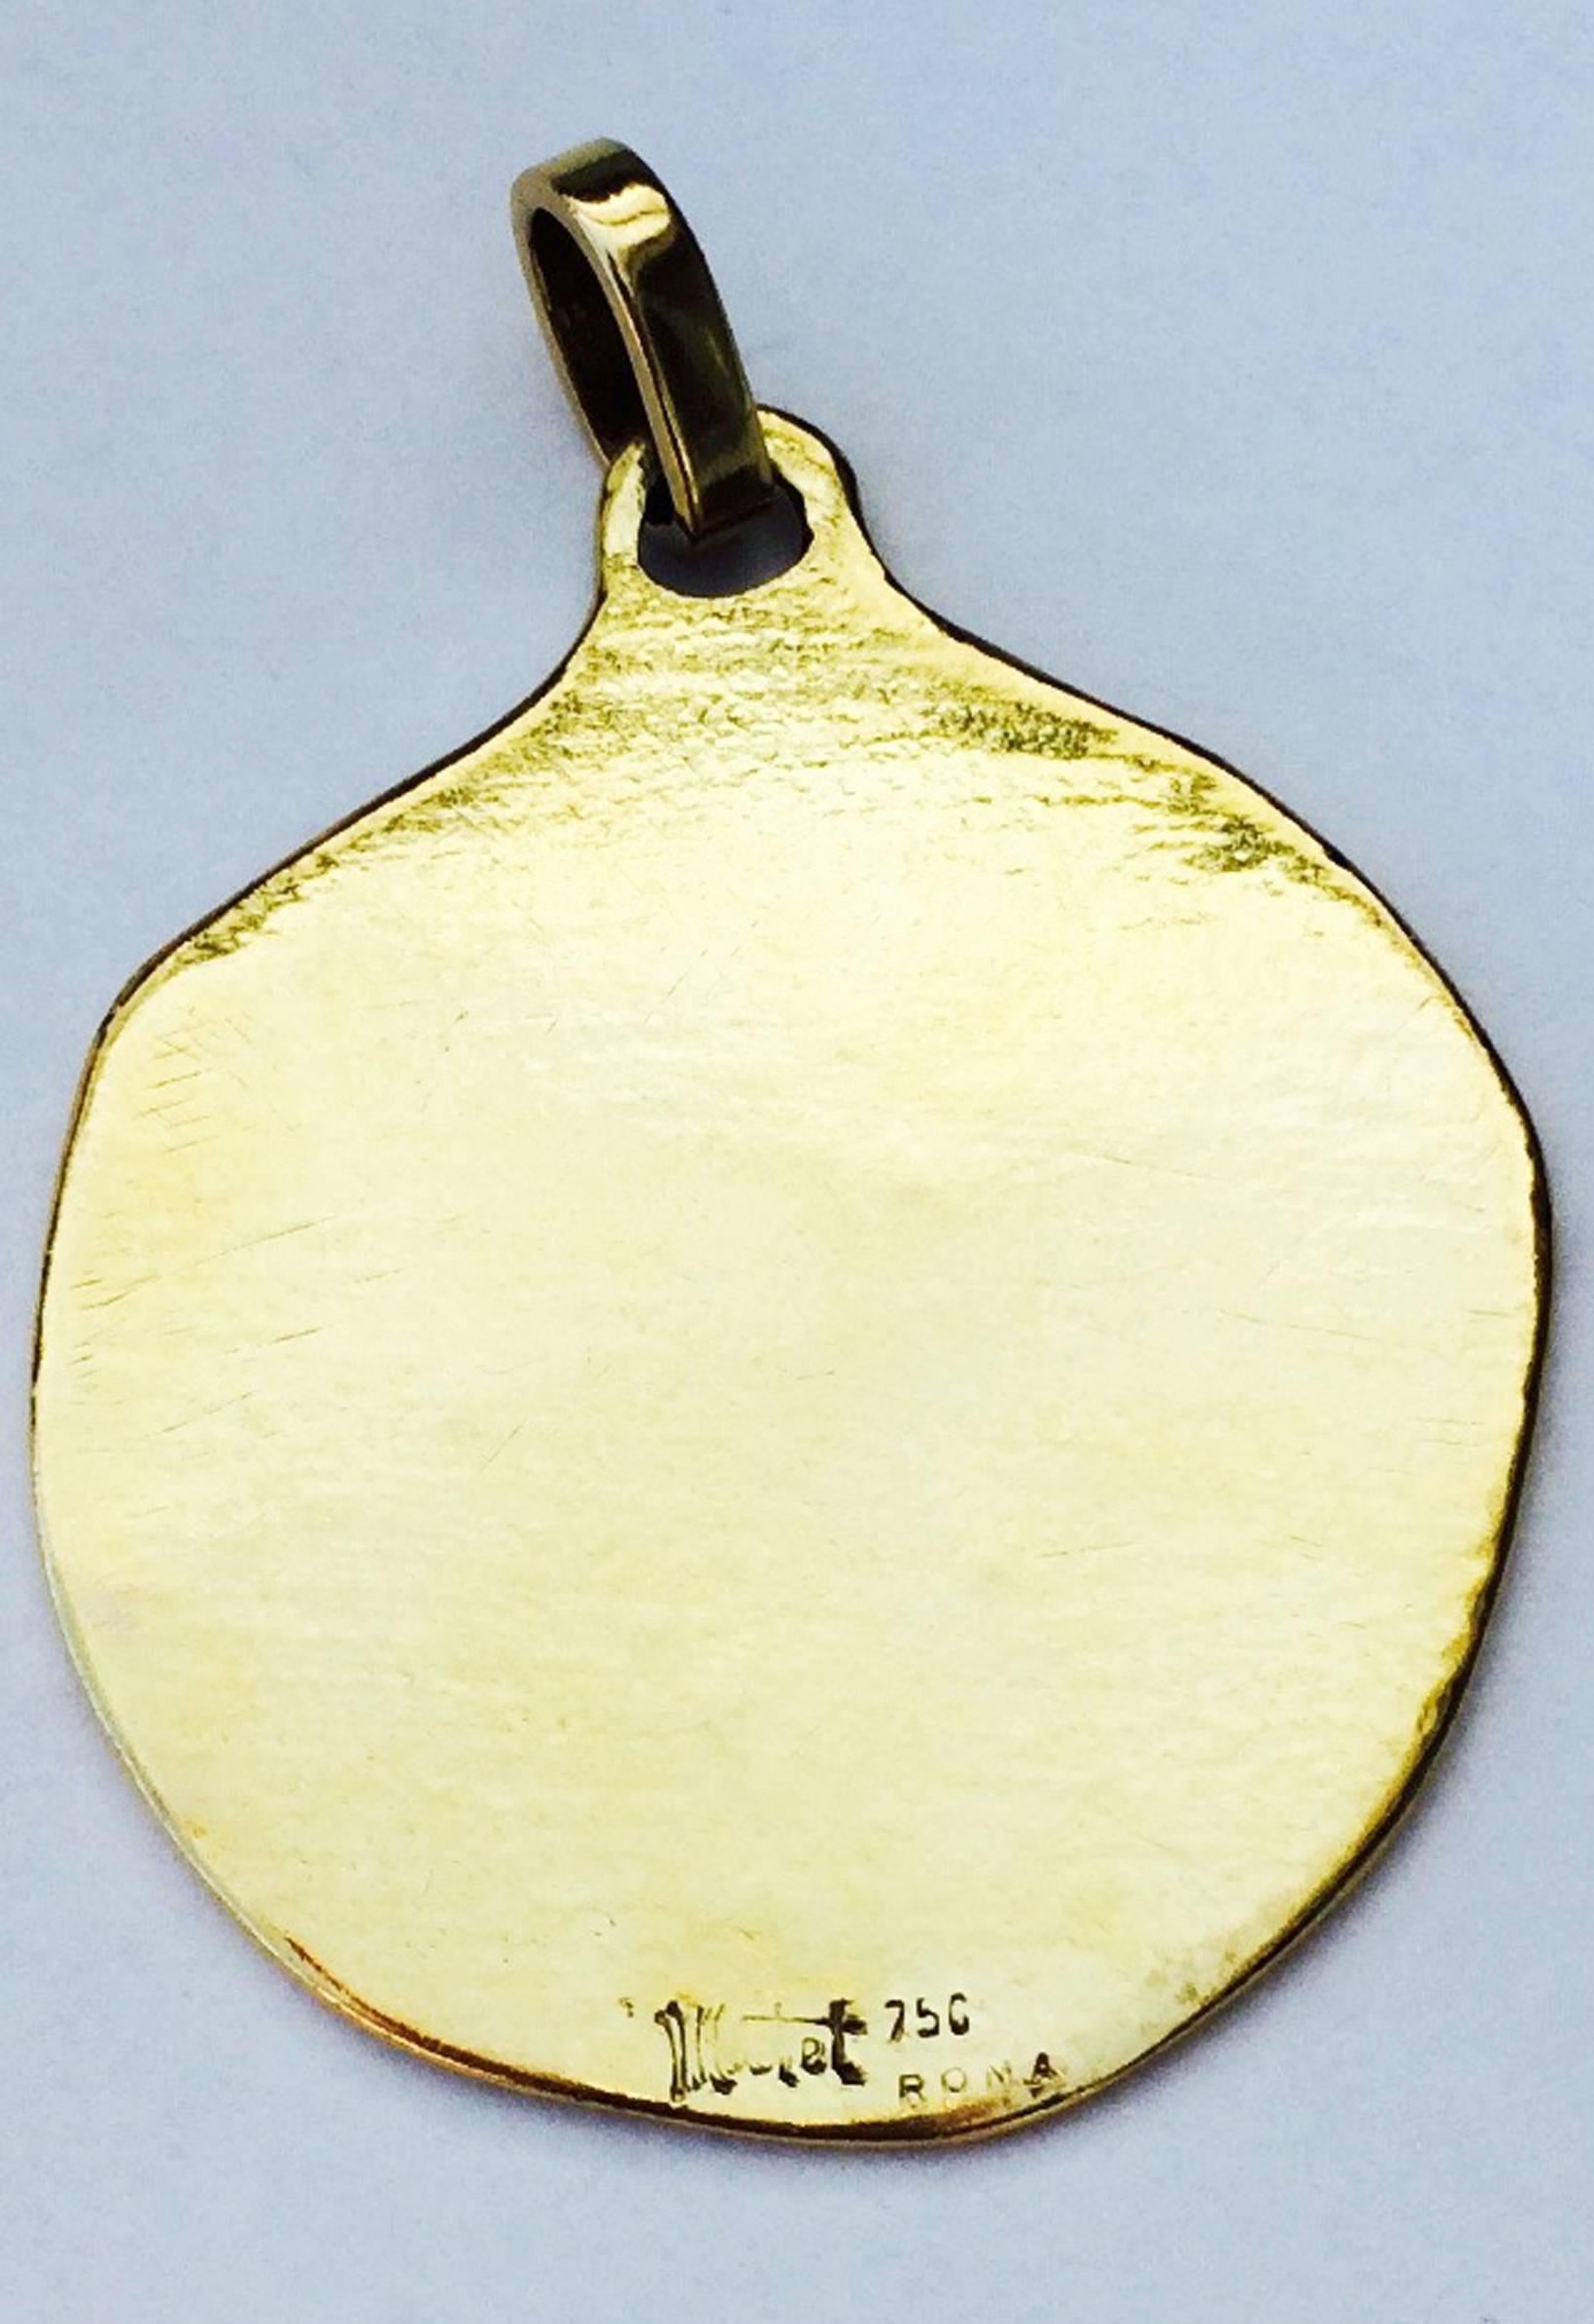 A fine and rare Bottega Mortet Roma Scorpio astrological gold pendant. Outstanding design and execution. Signed item includes original bale. Pristine.